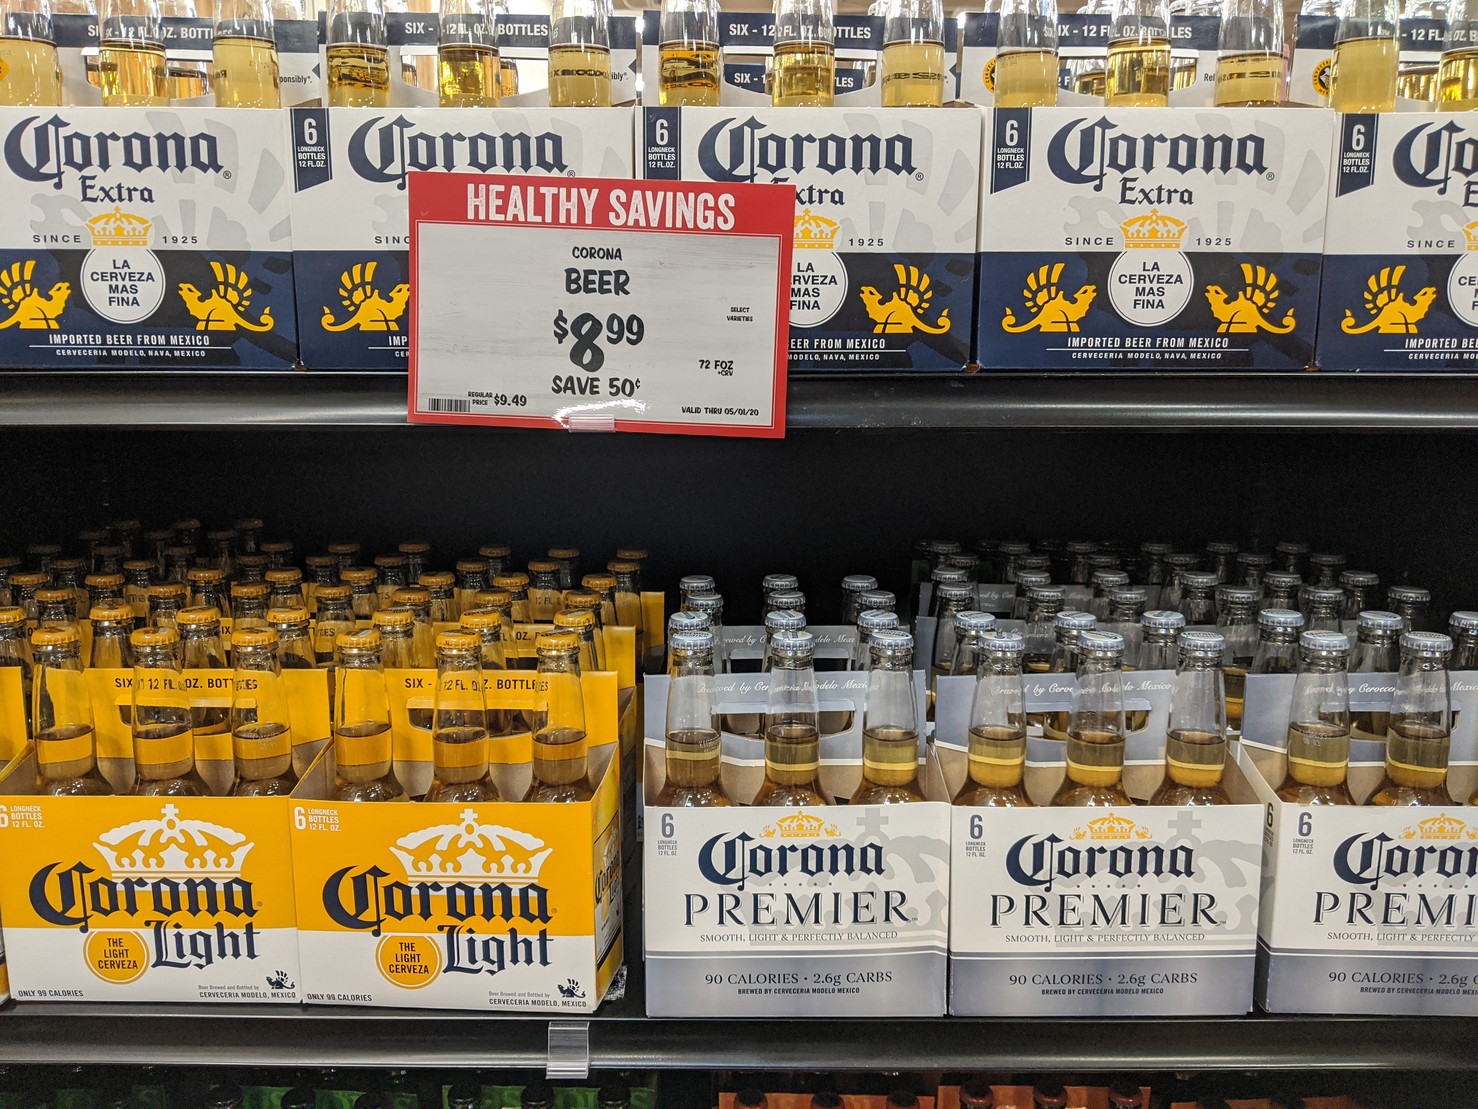 Healthy Savings on Corona